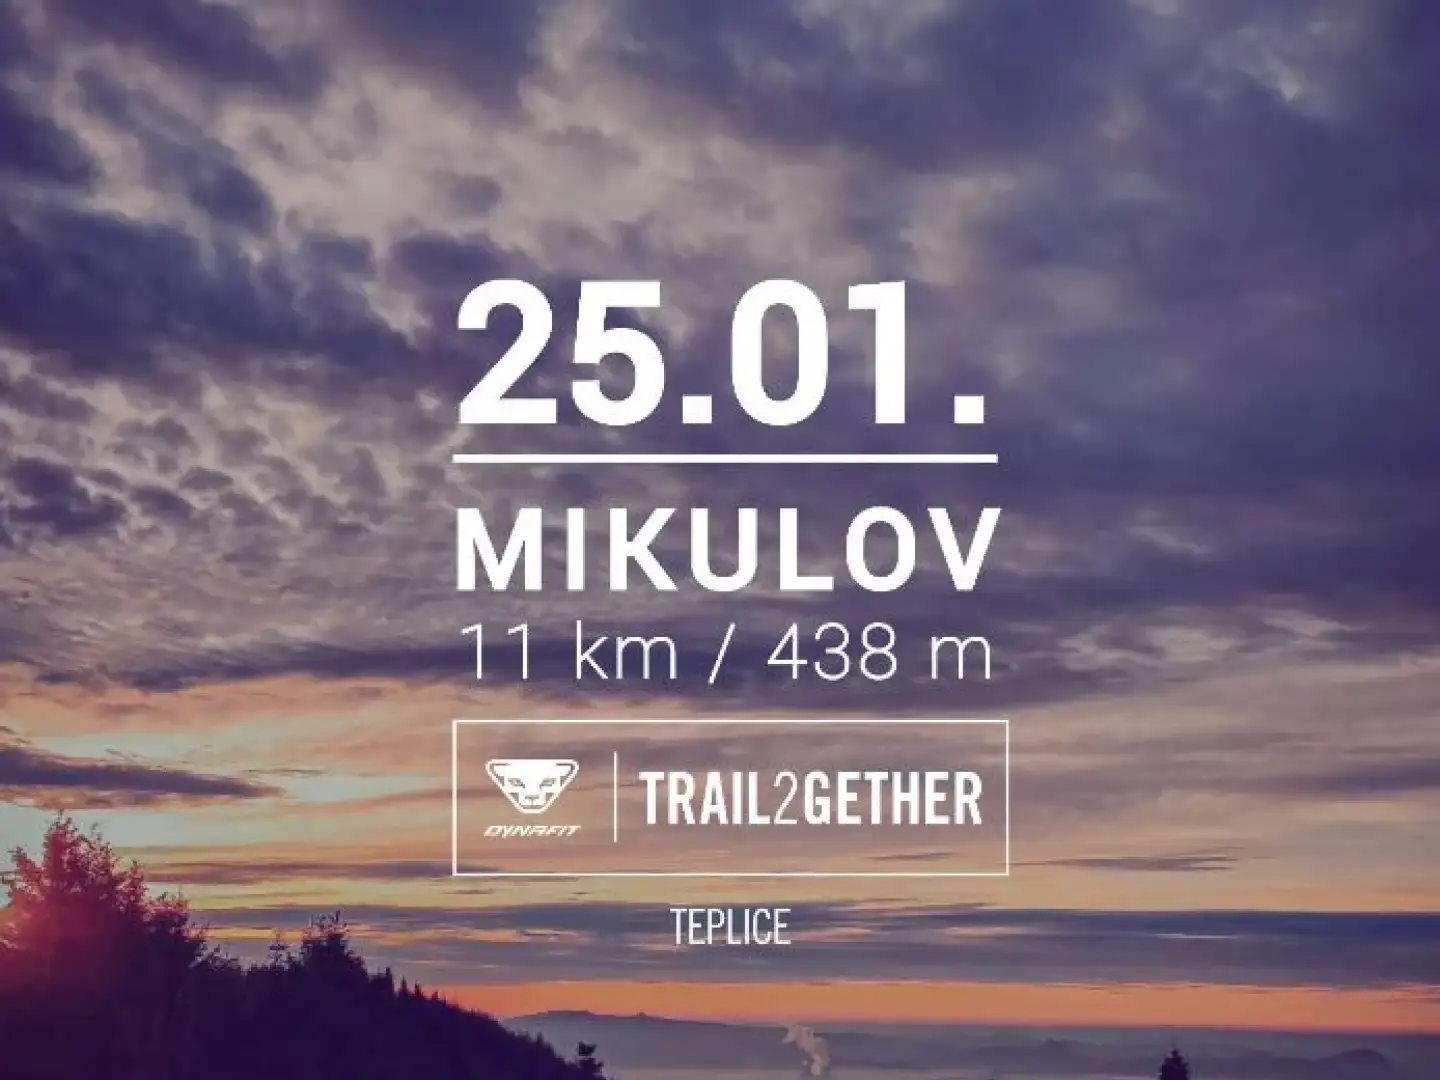 TRAIL2GETHER Teplice - Mikulov